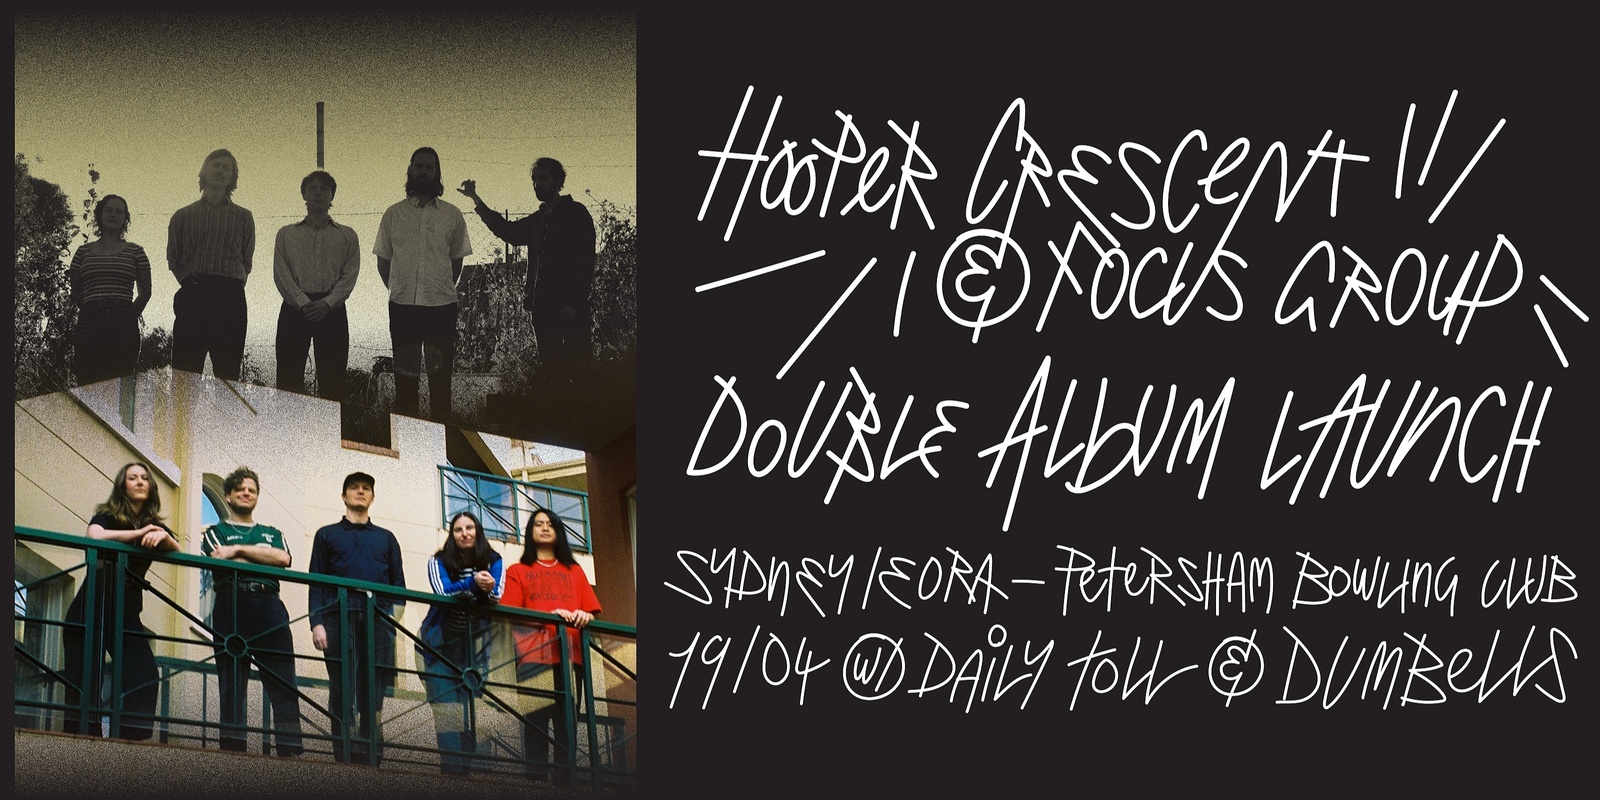 Banner image for Focus Group & Hooper Crescent Double Album Launch